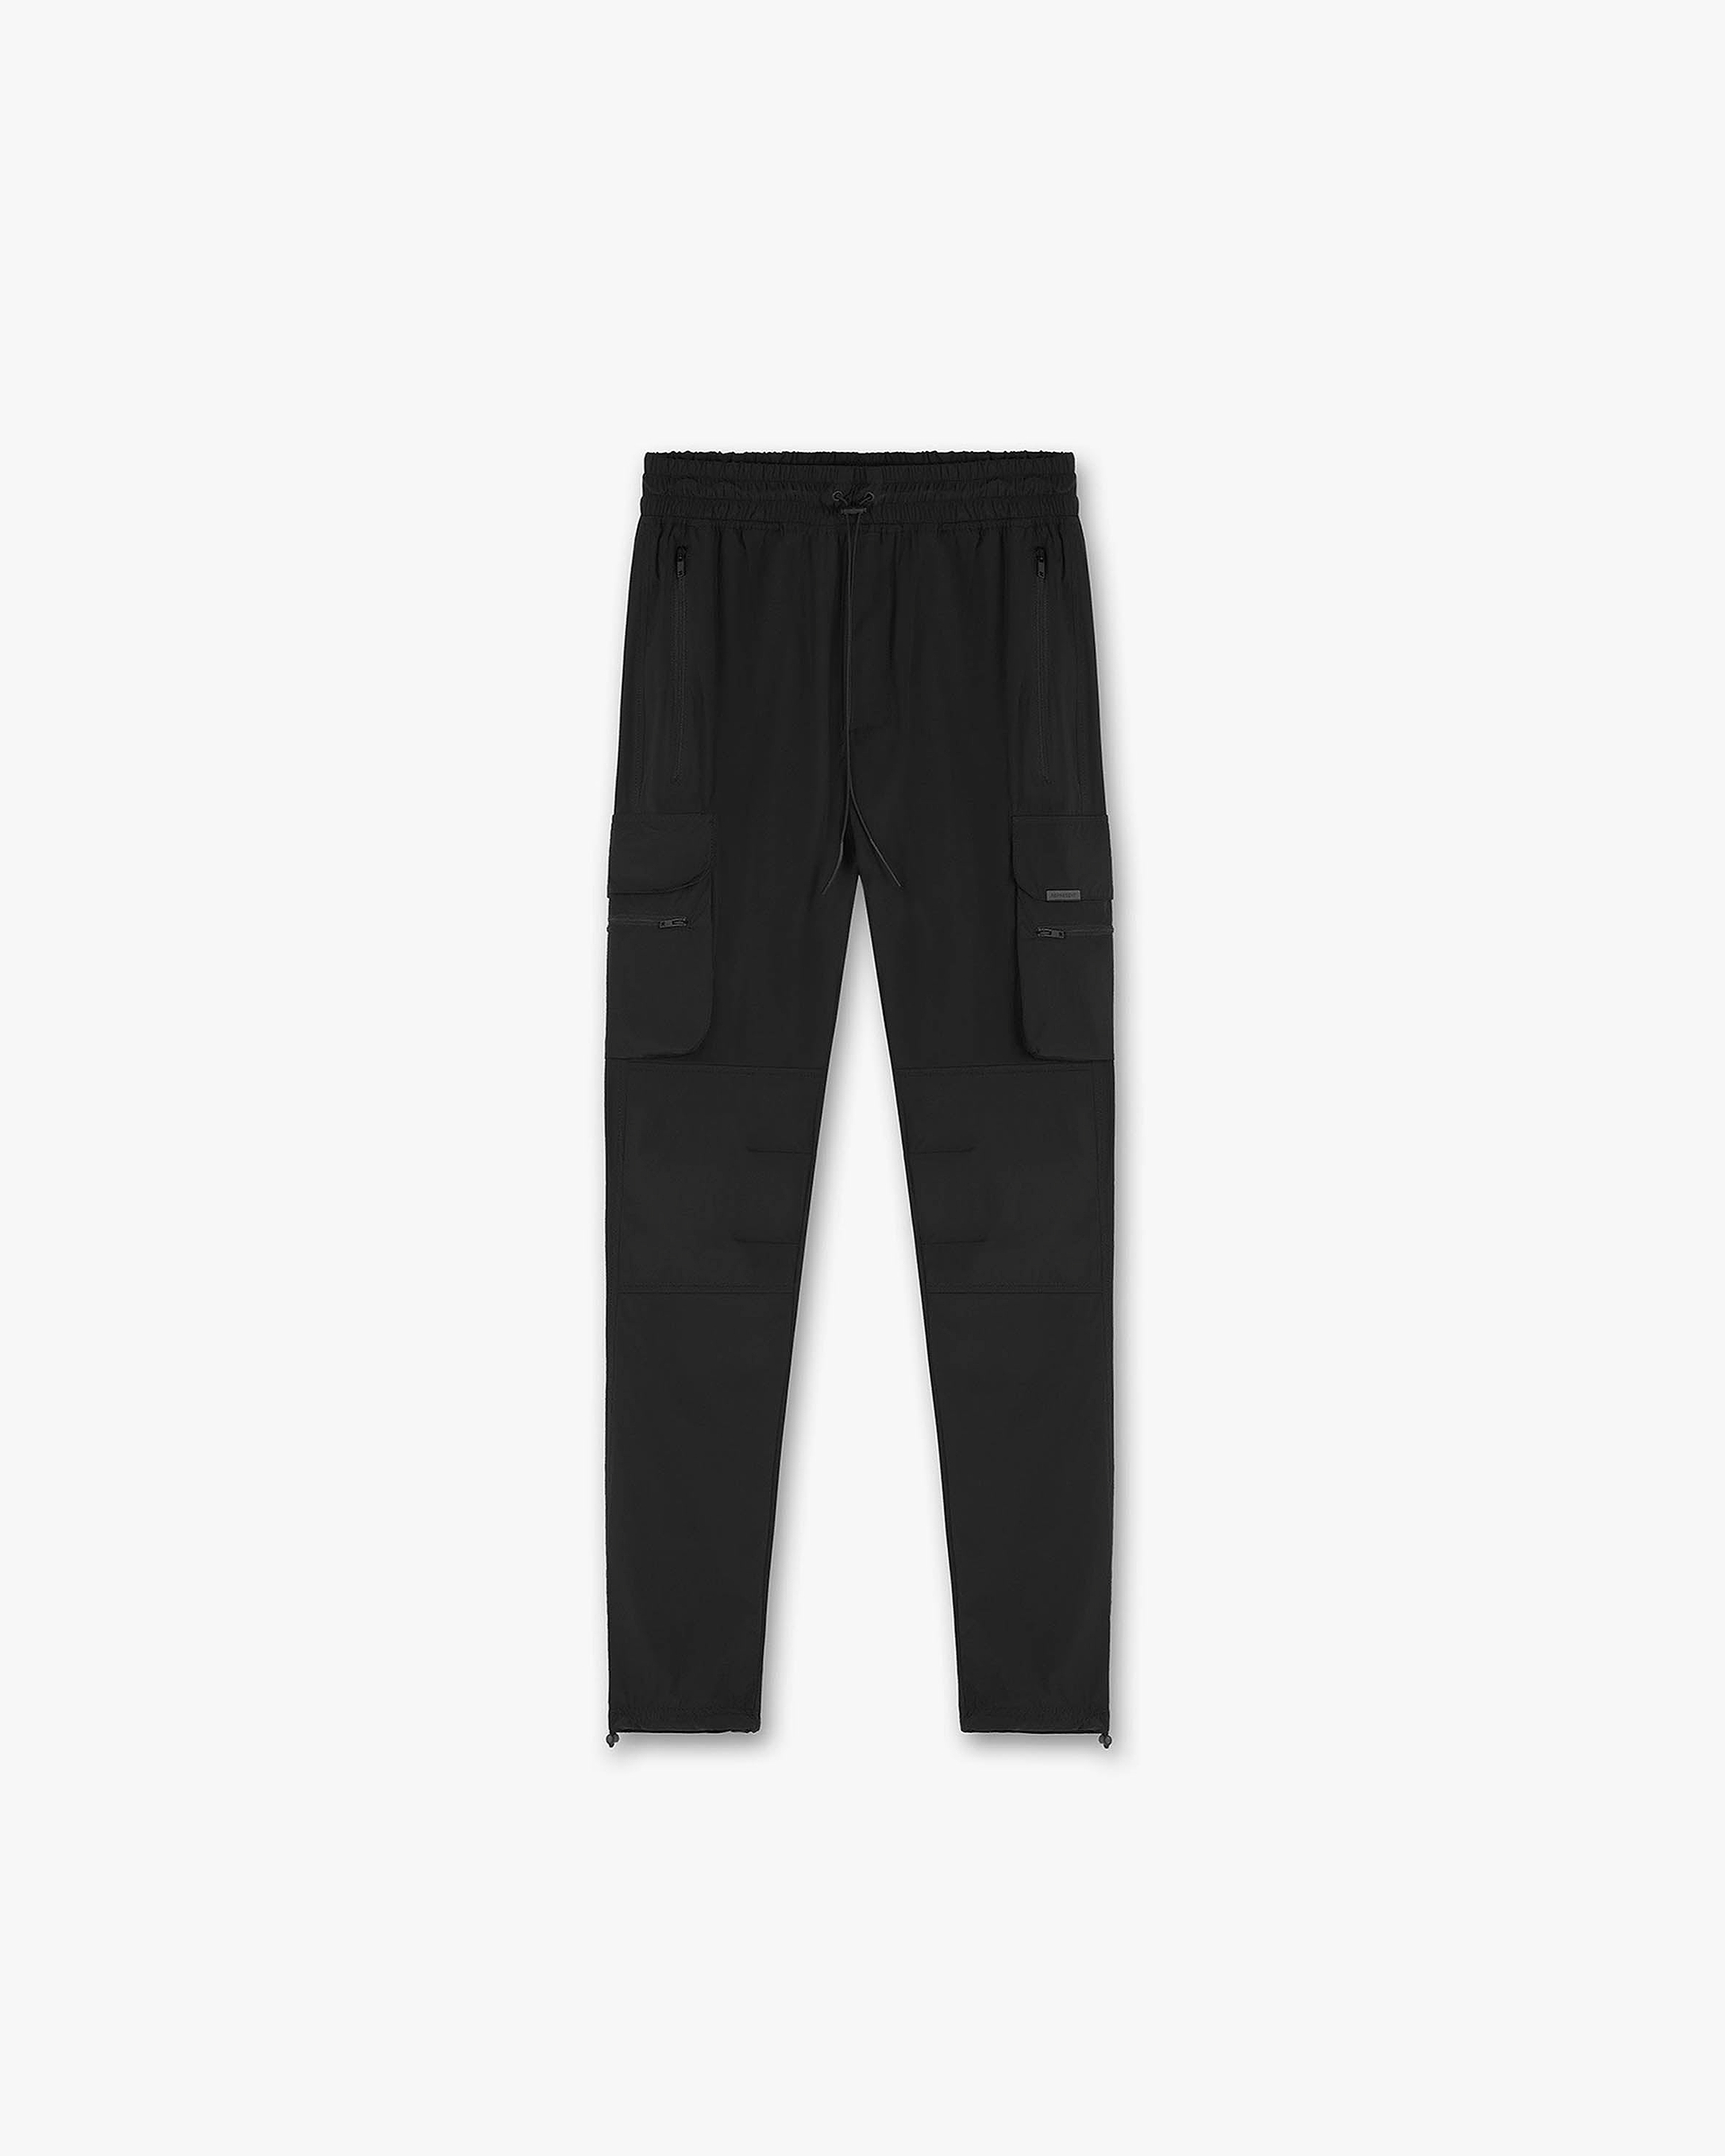 247 Pants | Black Nylon Cargo Pants | REPRESENT CLO